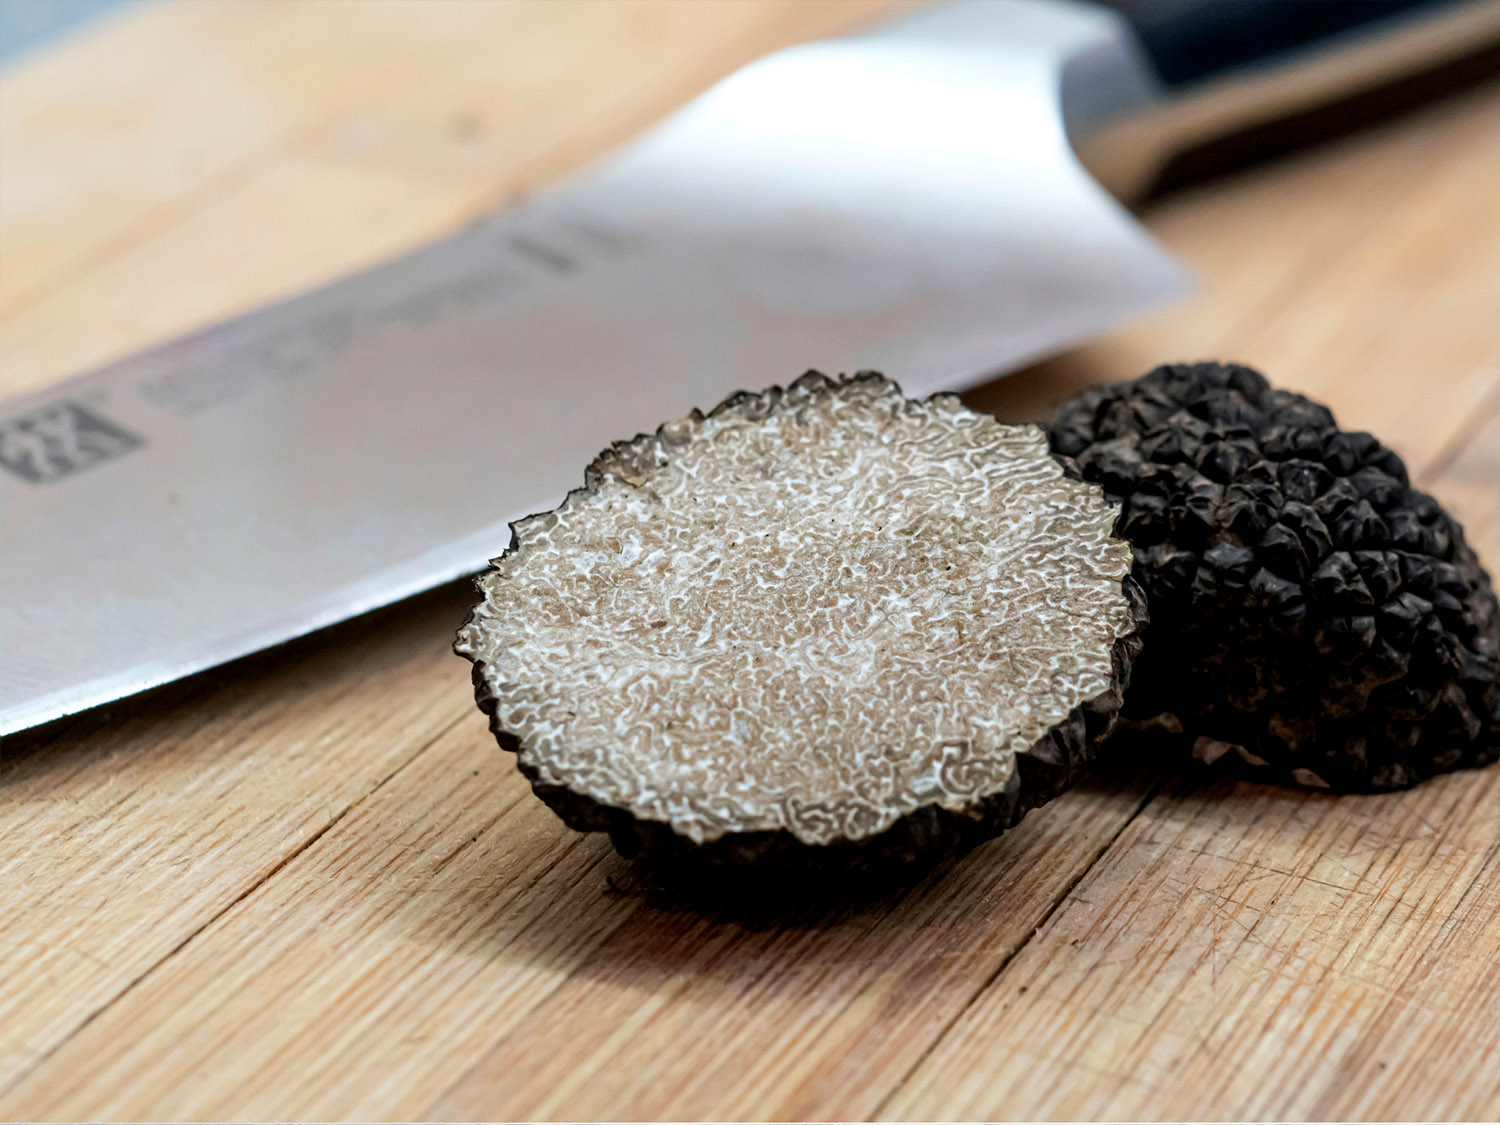 Périgord Noir (black) truffle